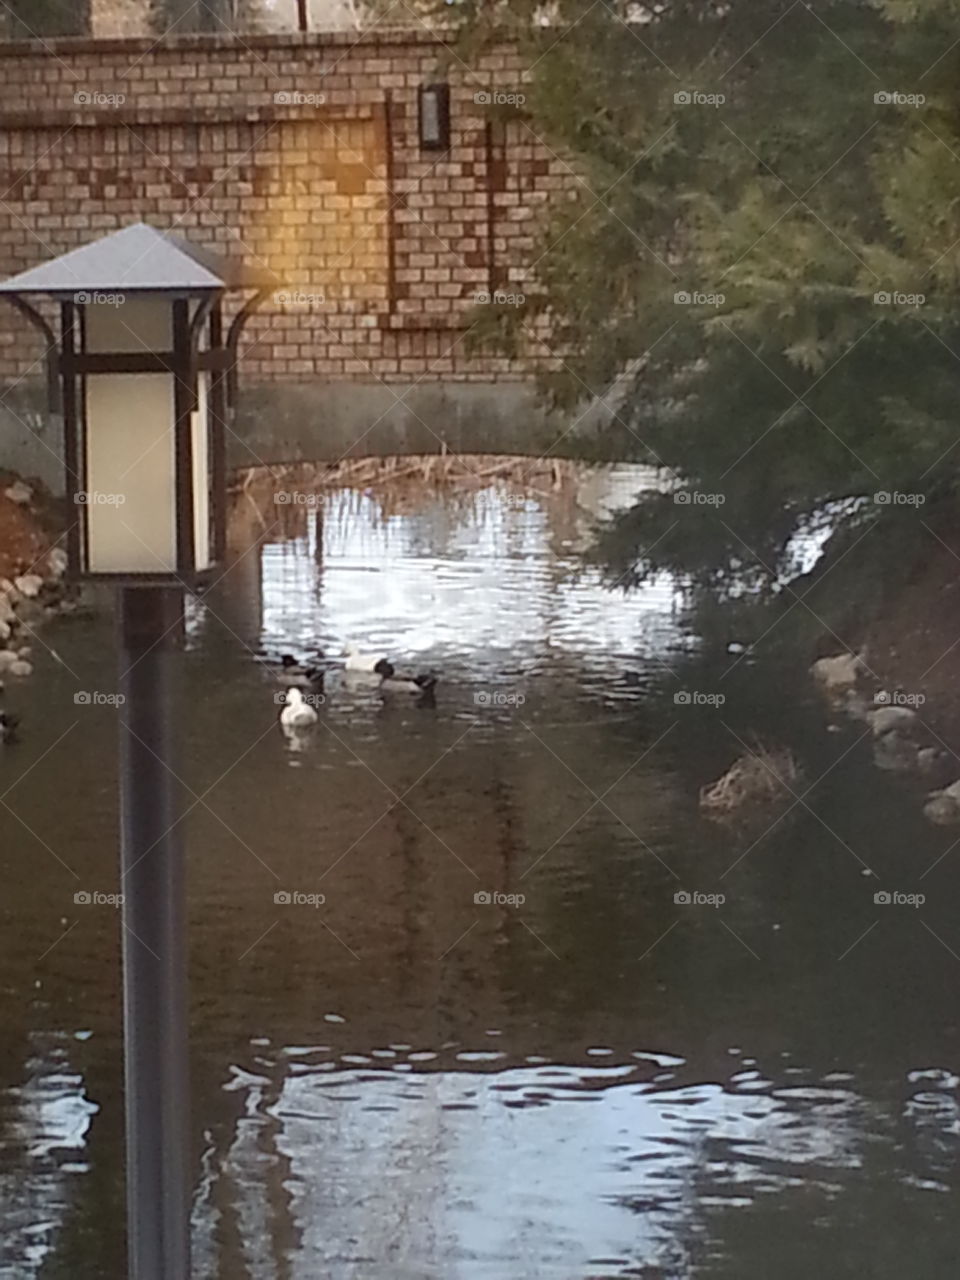 ducks on a lake, bishop ca